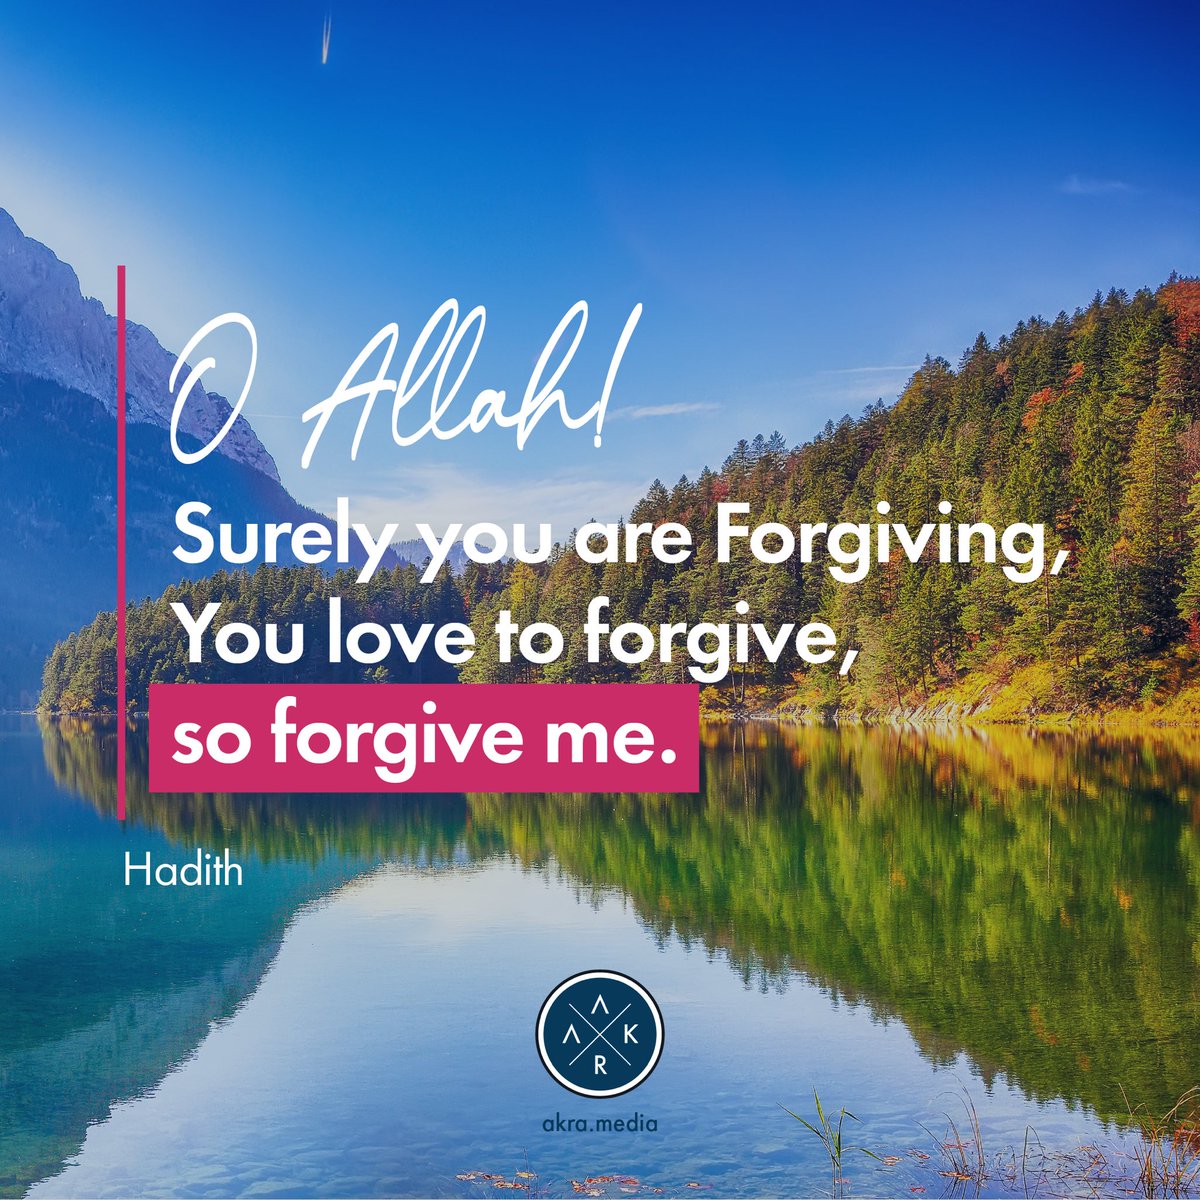 O Allah!
Surely you are Forgiving,
You love to forgive,
so forgive me.
-Hadith

#dua #makedua #jumamubarak #jummahmubarak #praying #prayer #islam #repent #startagain #hadith #ProphetMuhammad